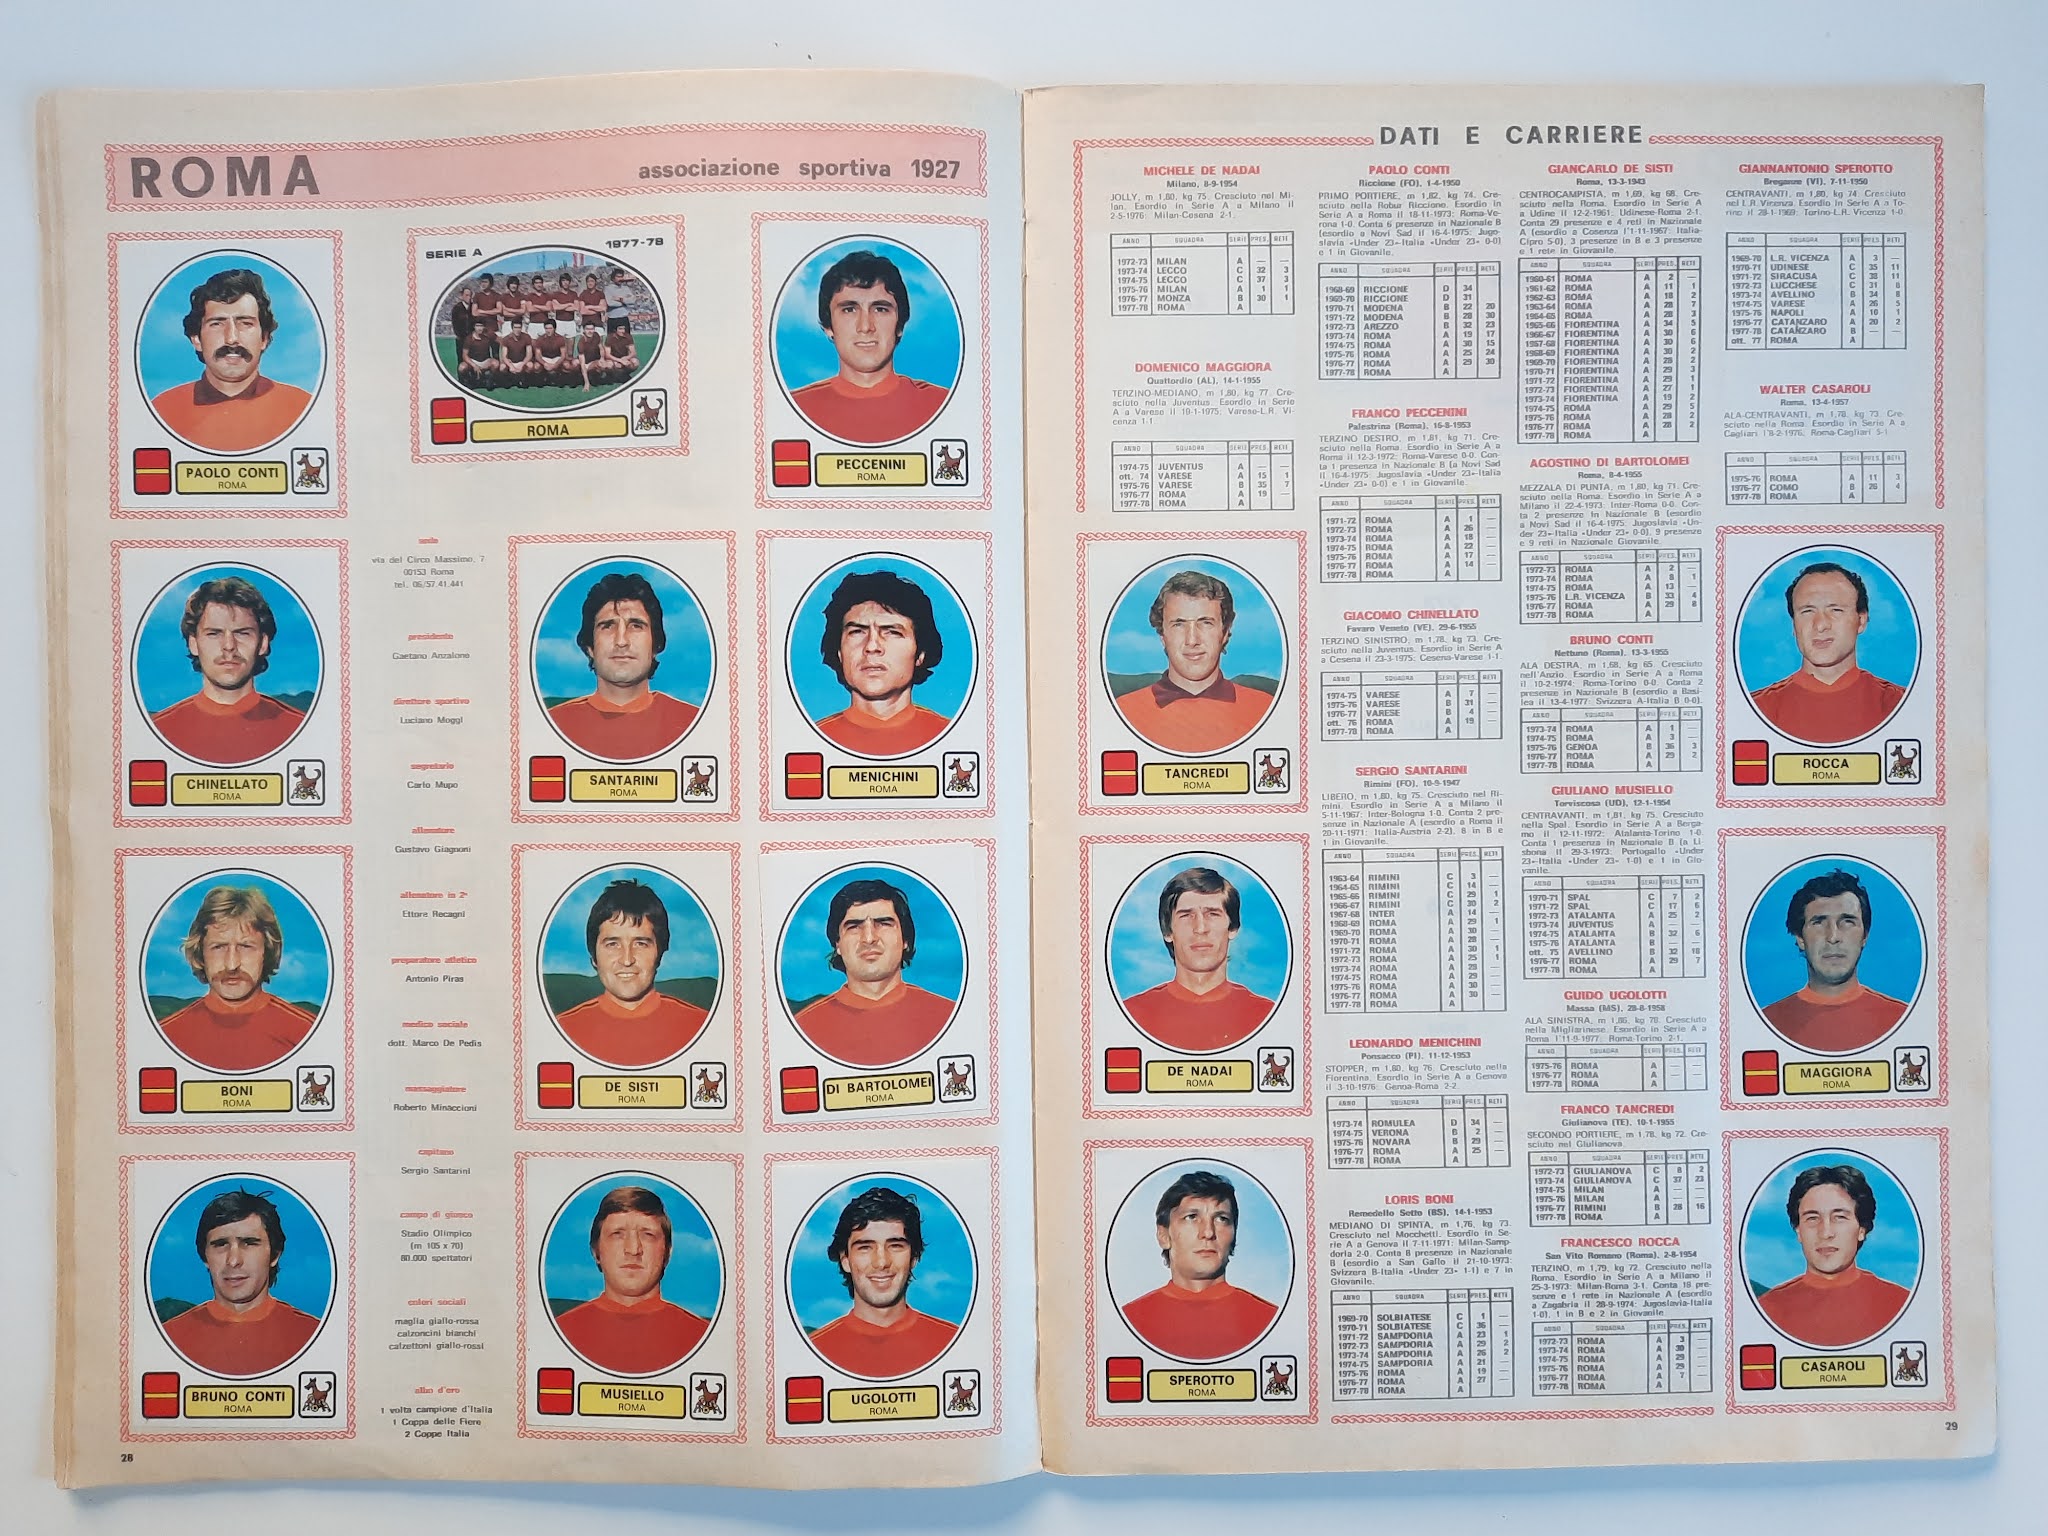 Only Good Stickers: Panini Calciatori 1978-79